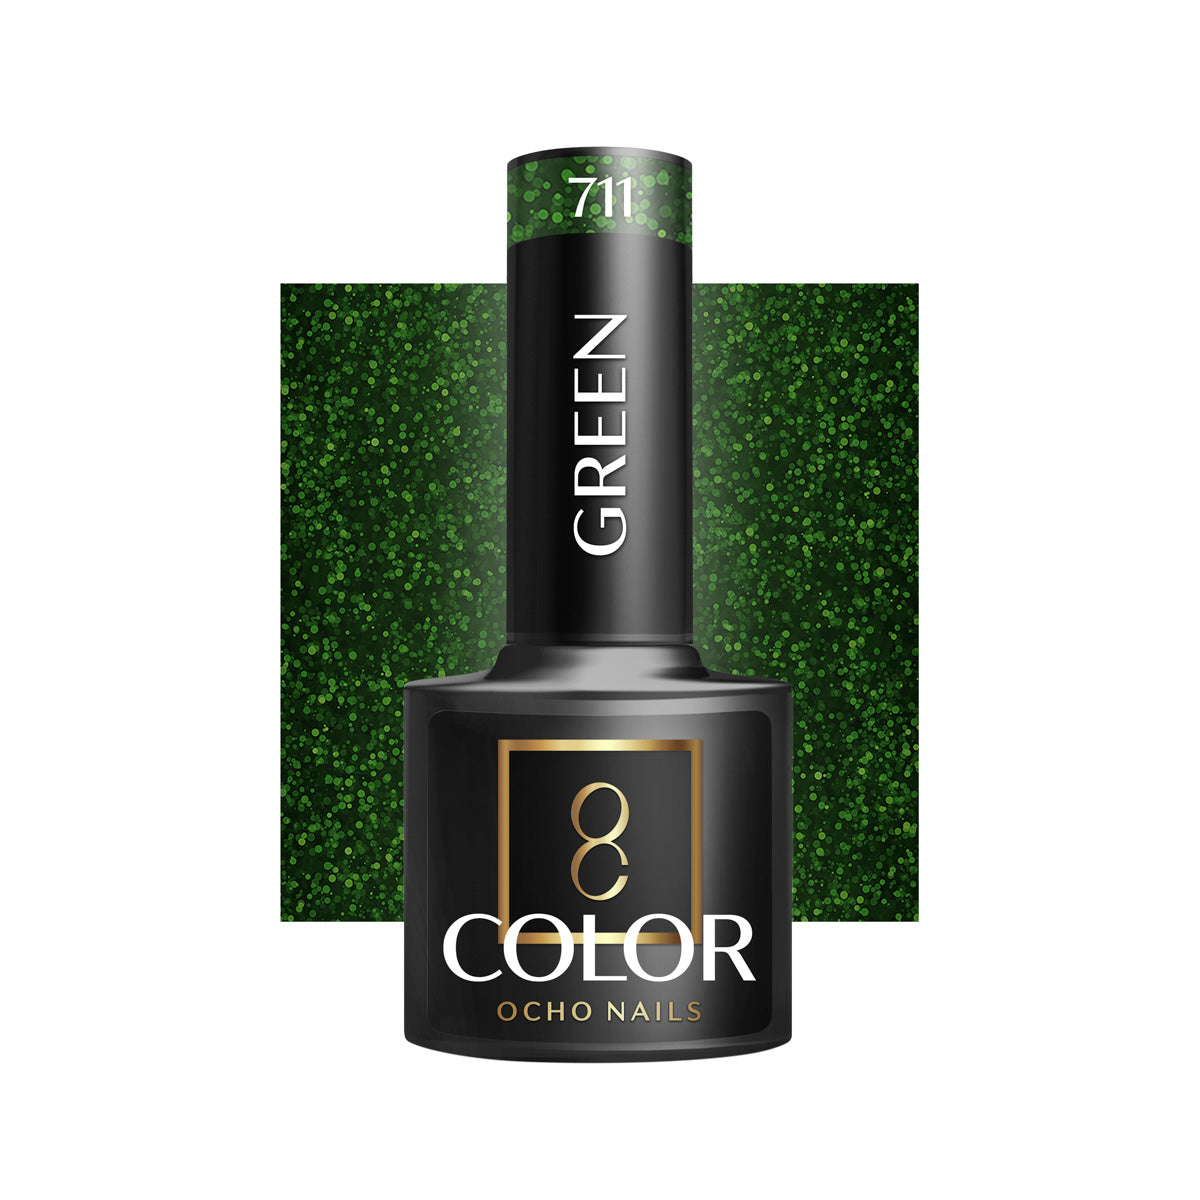 OCHO NAILS Hybride nagellak groen 711 -5 g